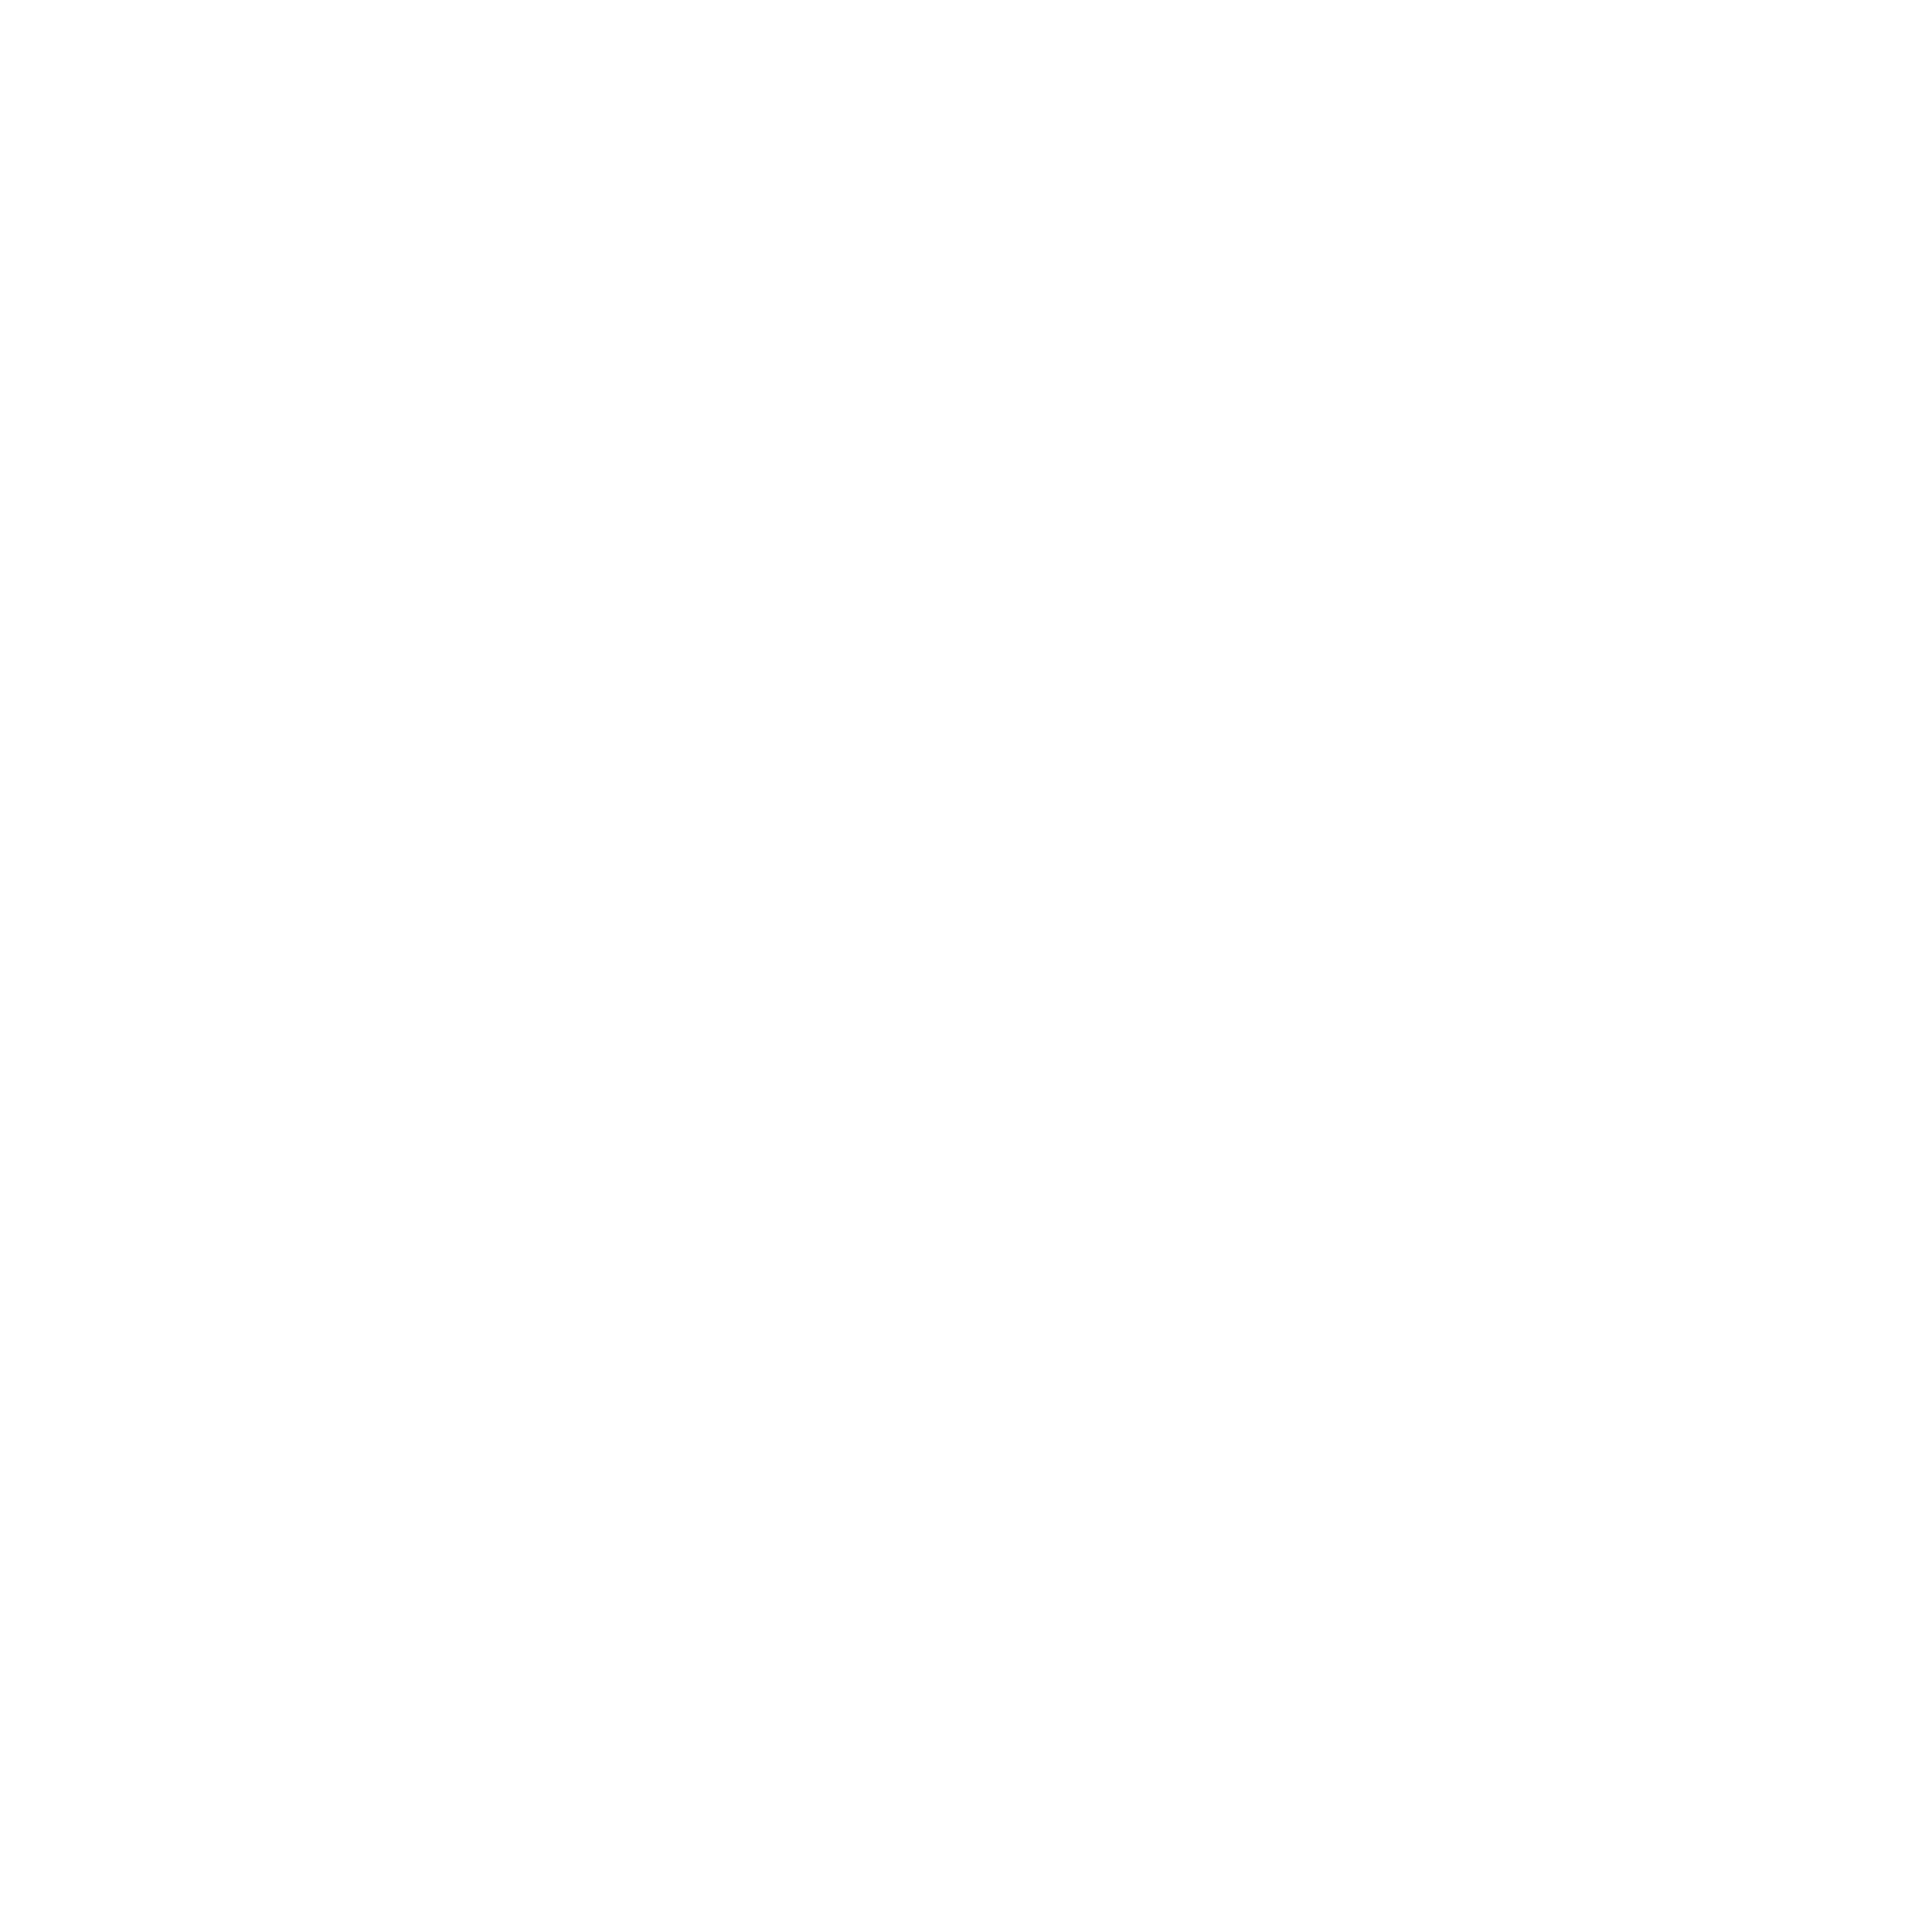 LA Times Crossword 29 Nov 18, Thursday 